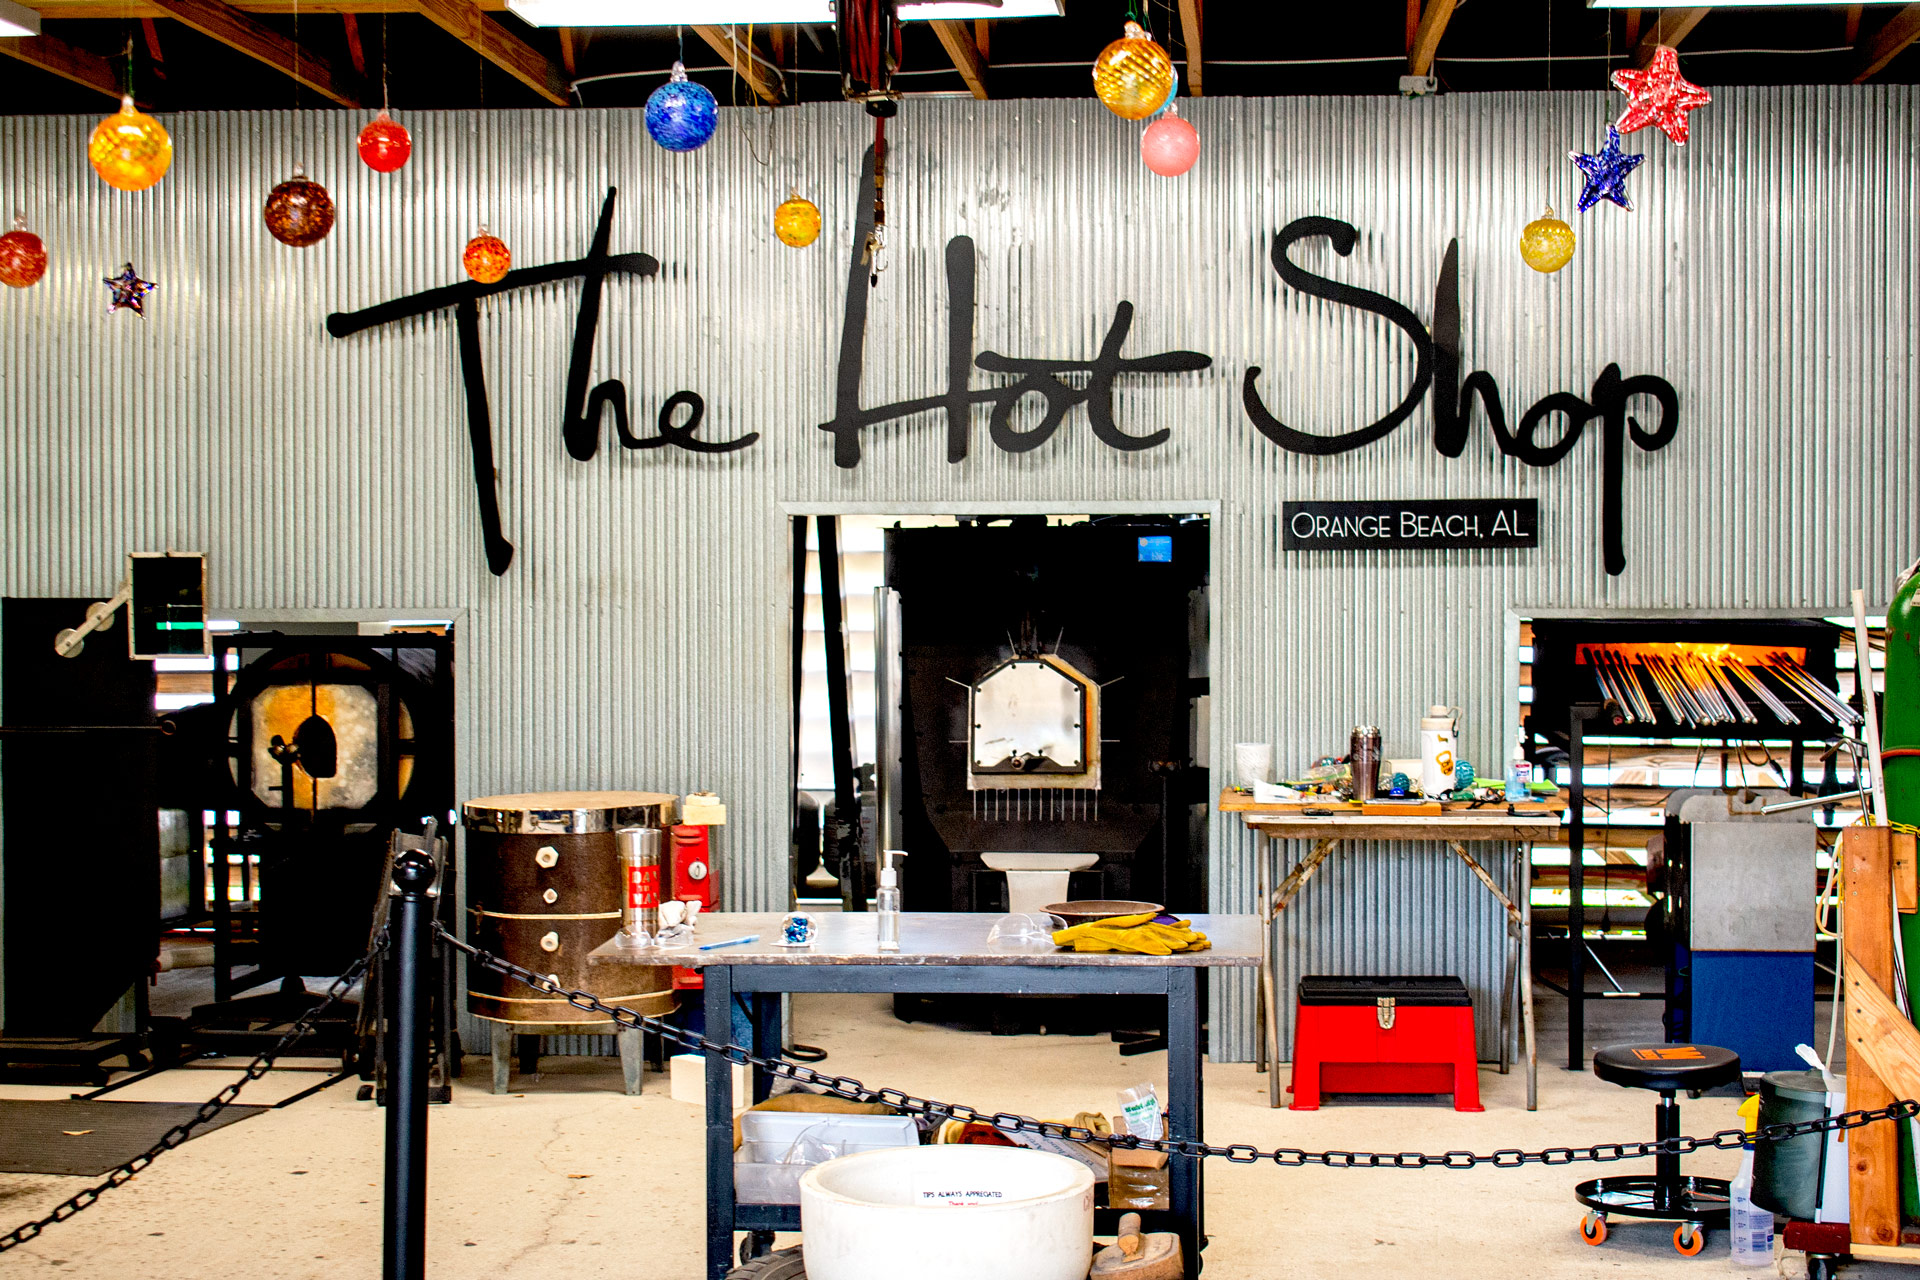 The hot shop